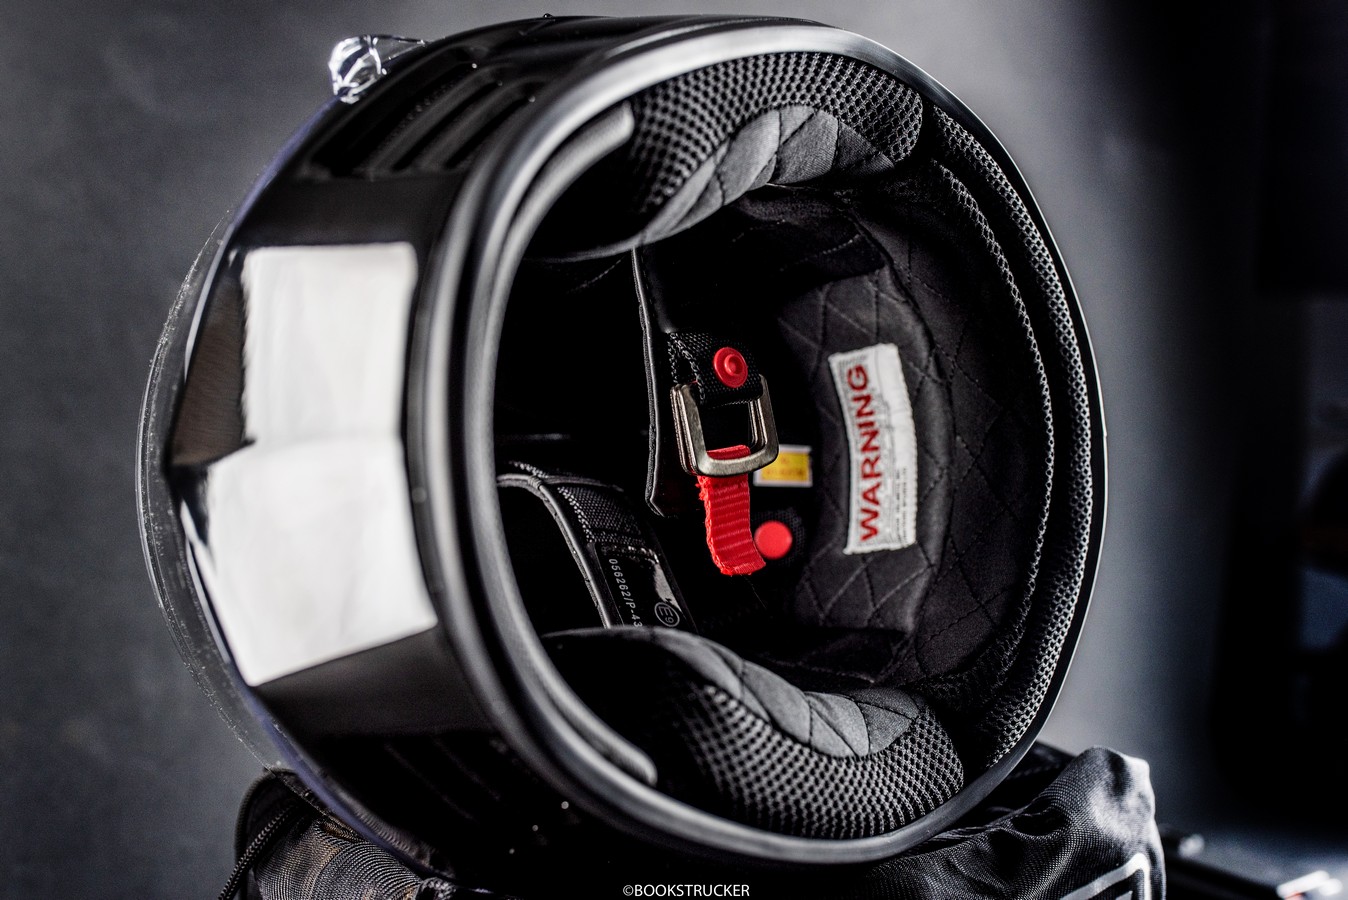 The interior of the Simpson Speed Bandit Helmet viewed from below